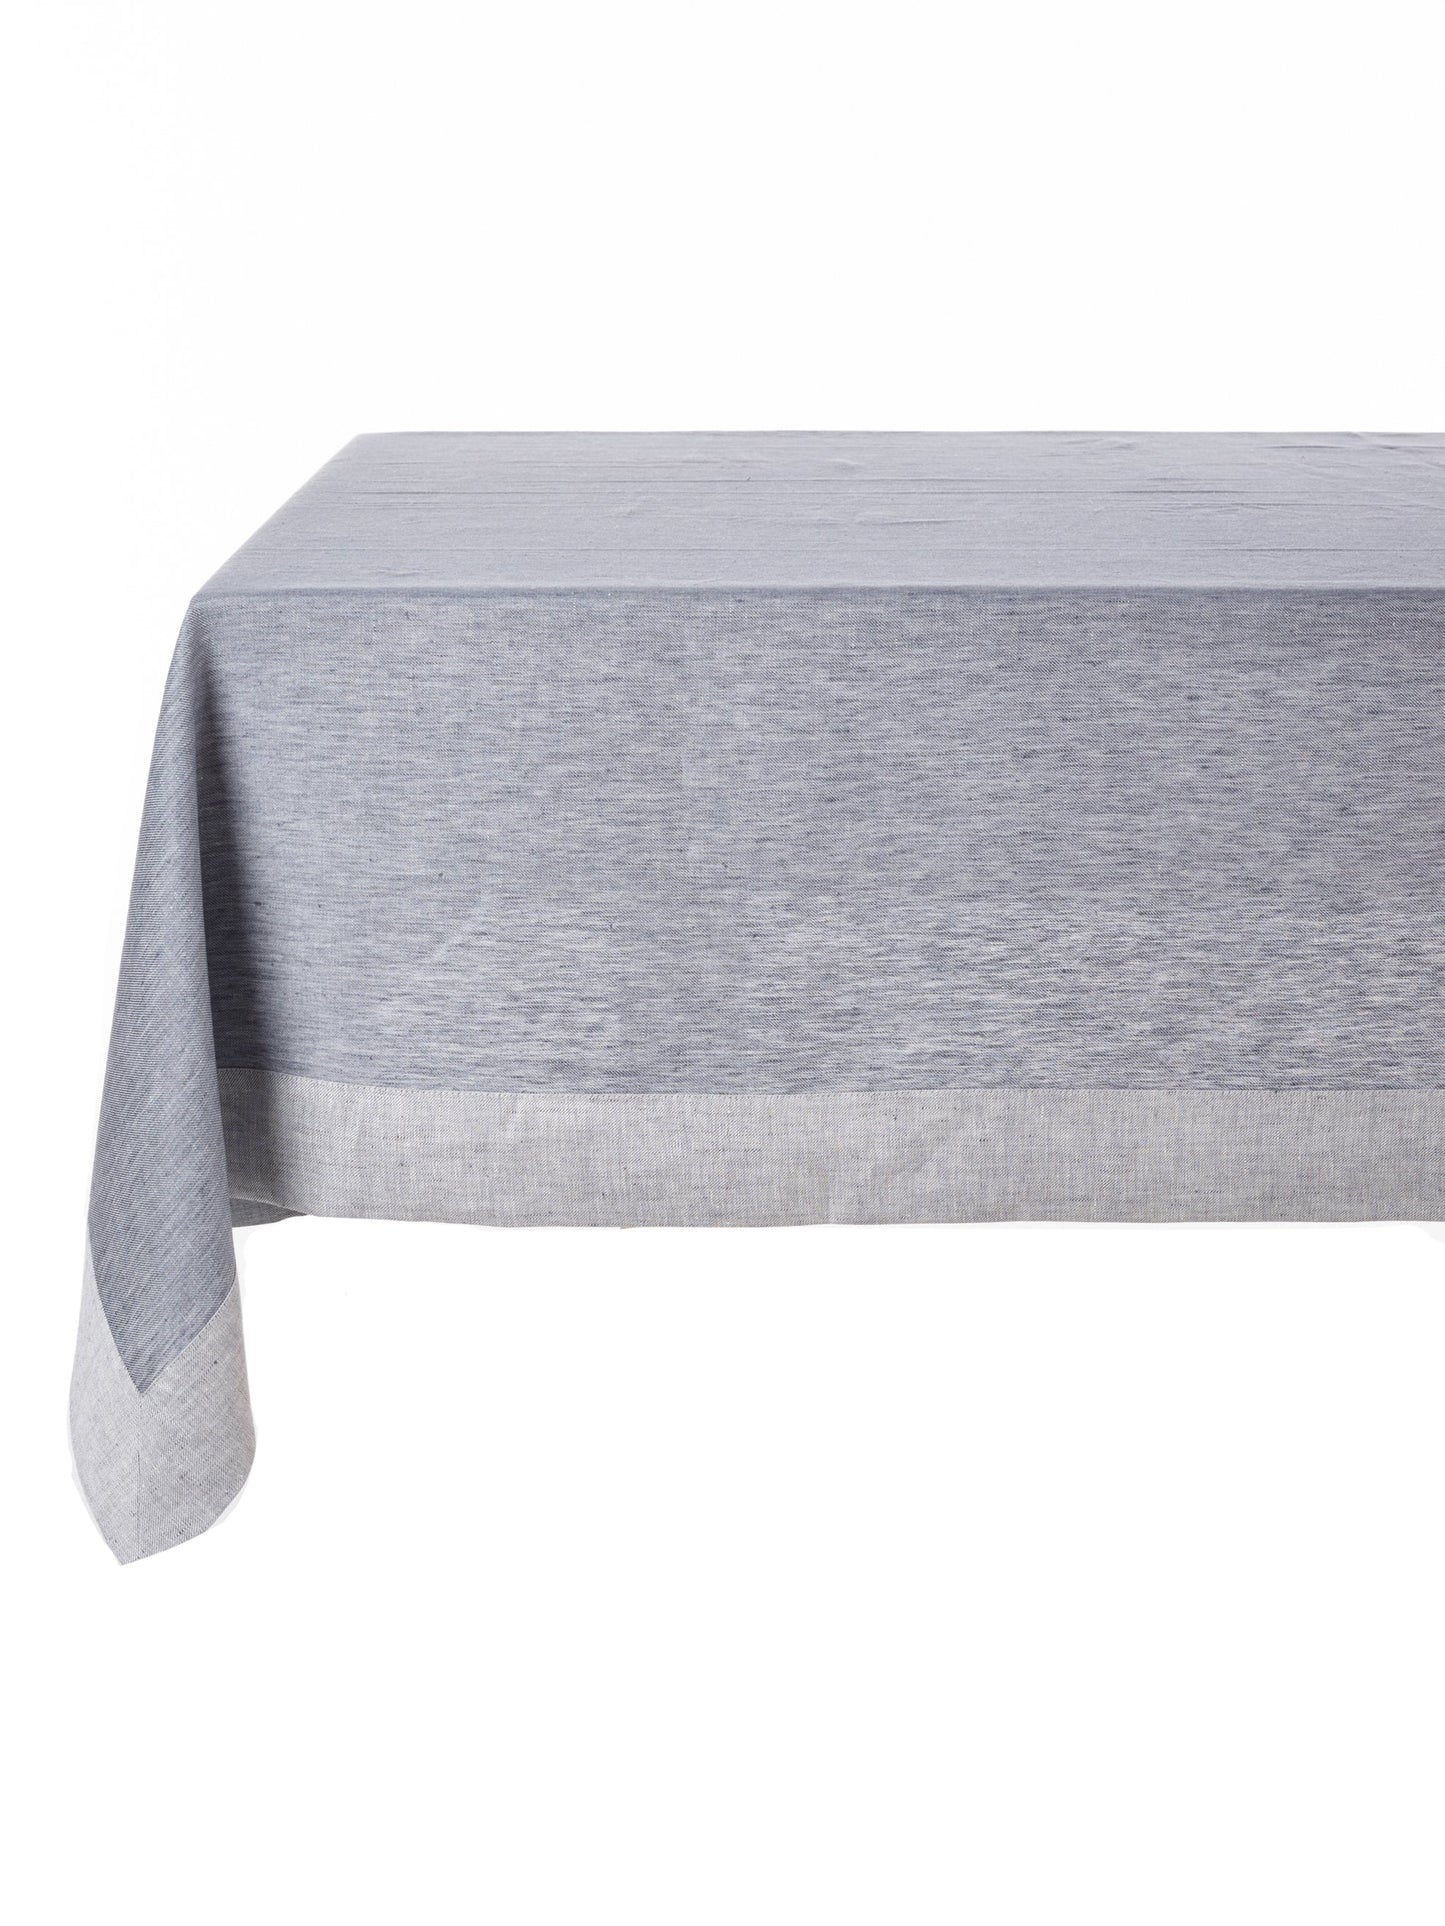 Libeco Frascati Gray Linen Collection Tablecloth Weston Table